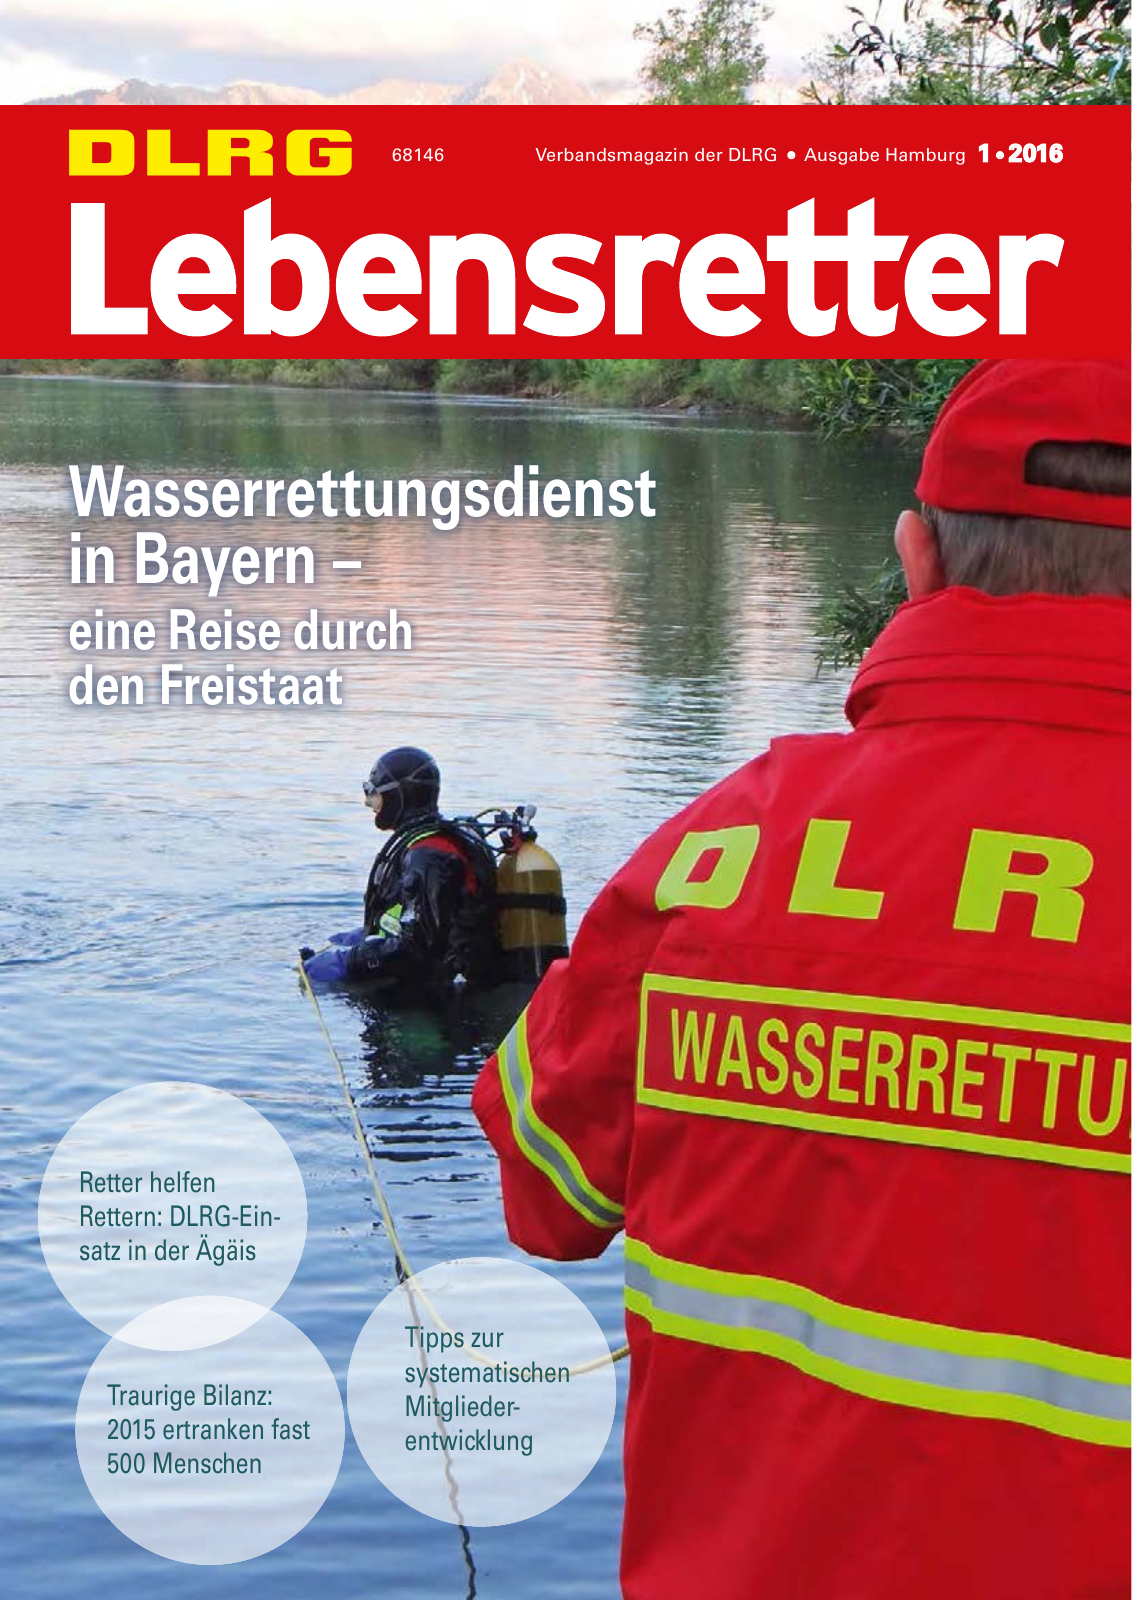 Vorschau Lebensretter 1/2016 - Regionalausgabe Hamburg Seite 1